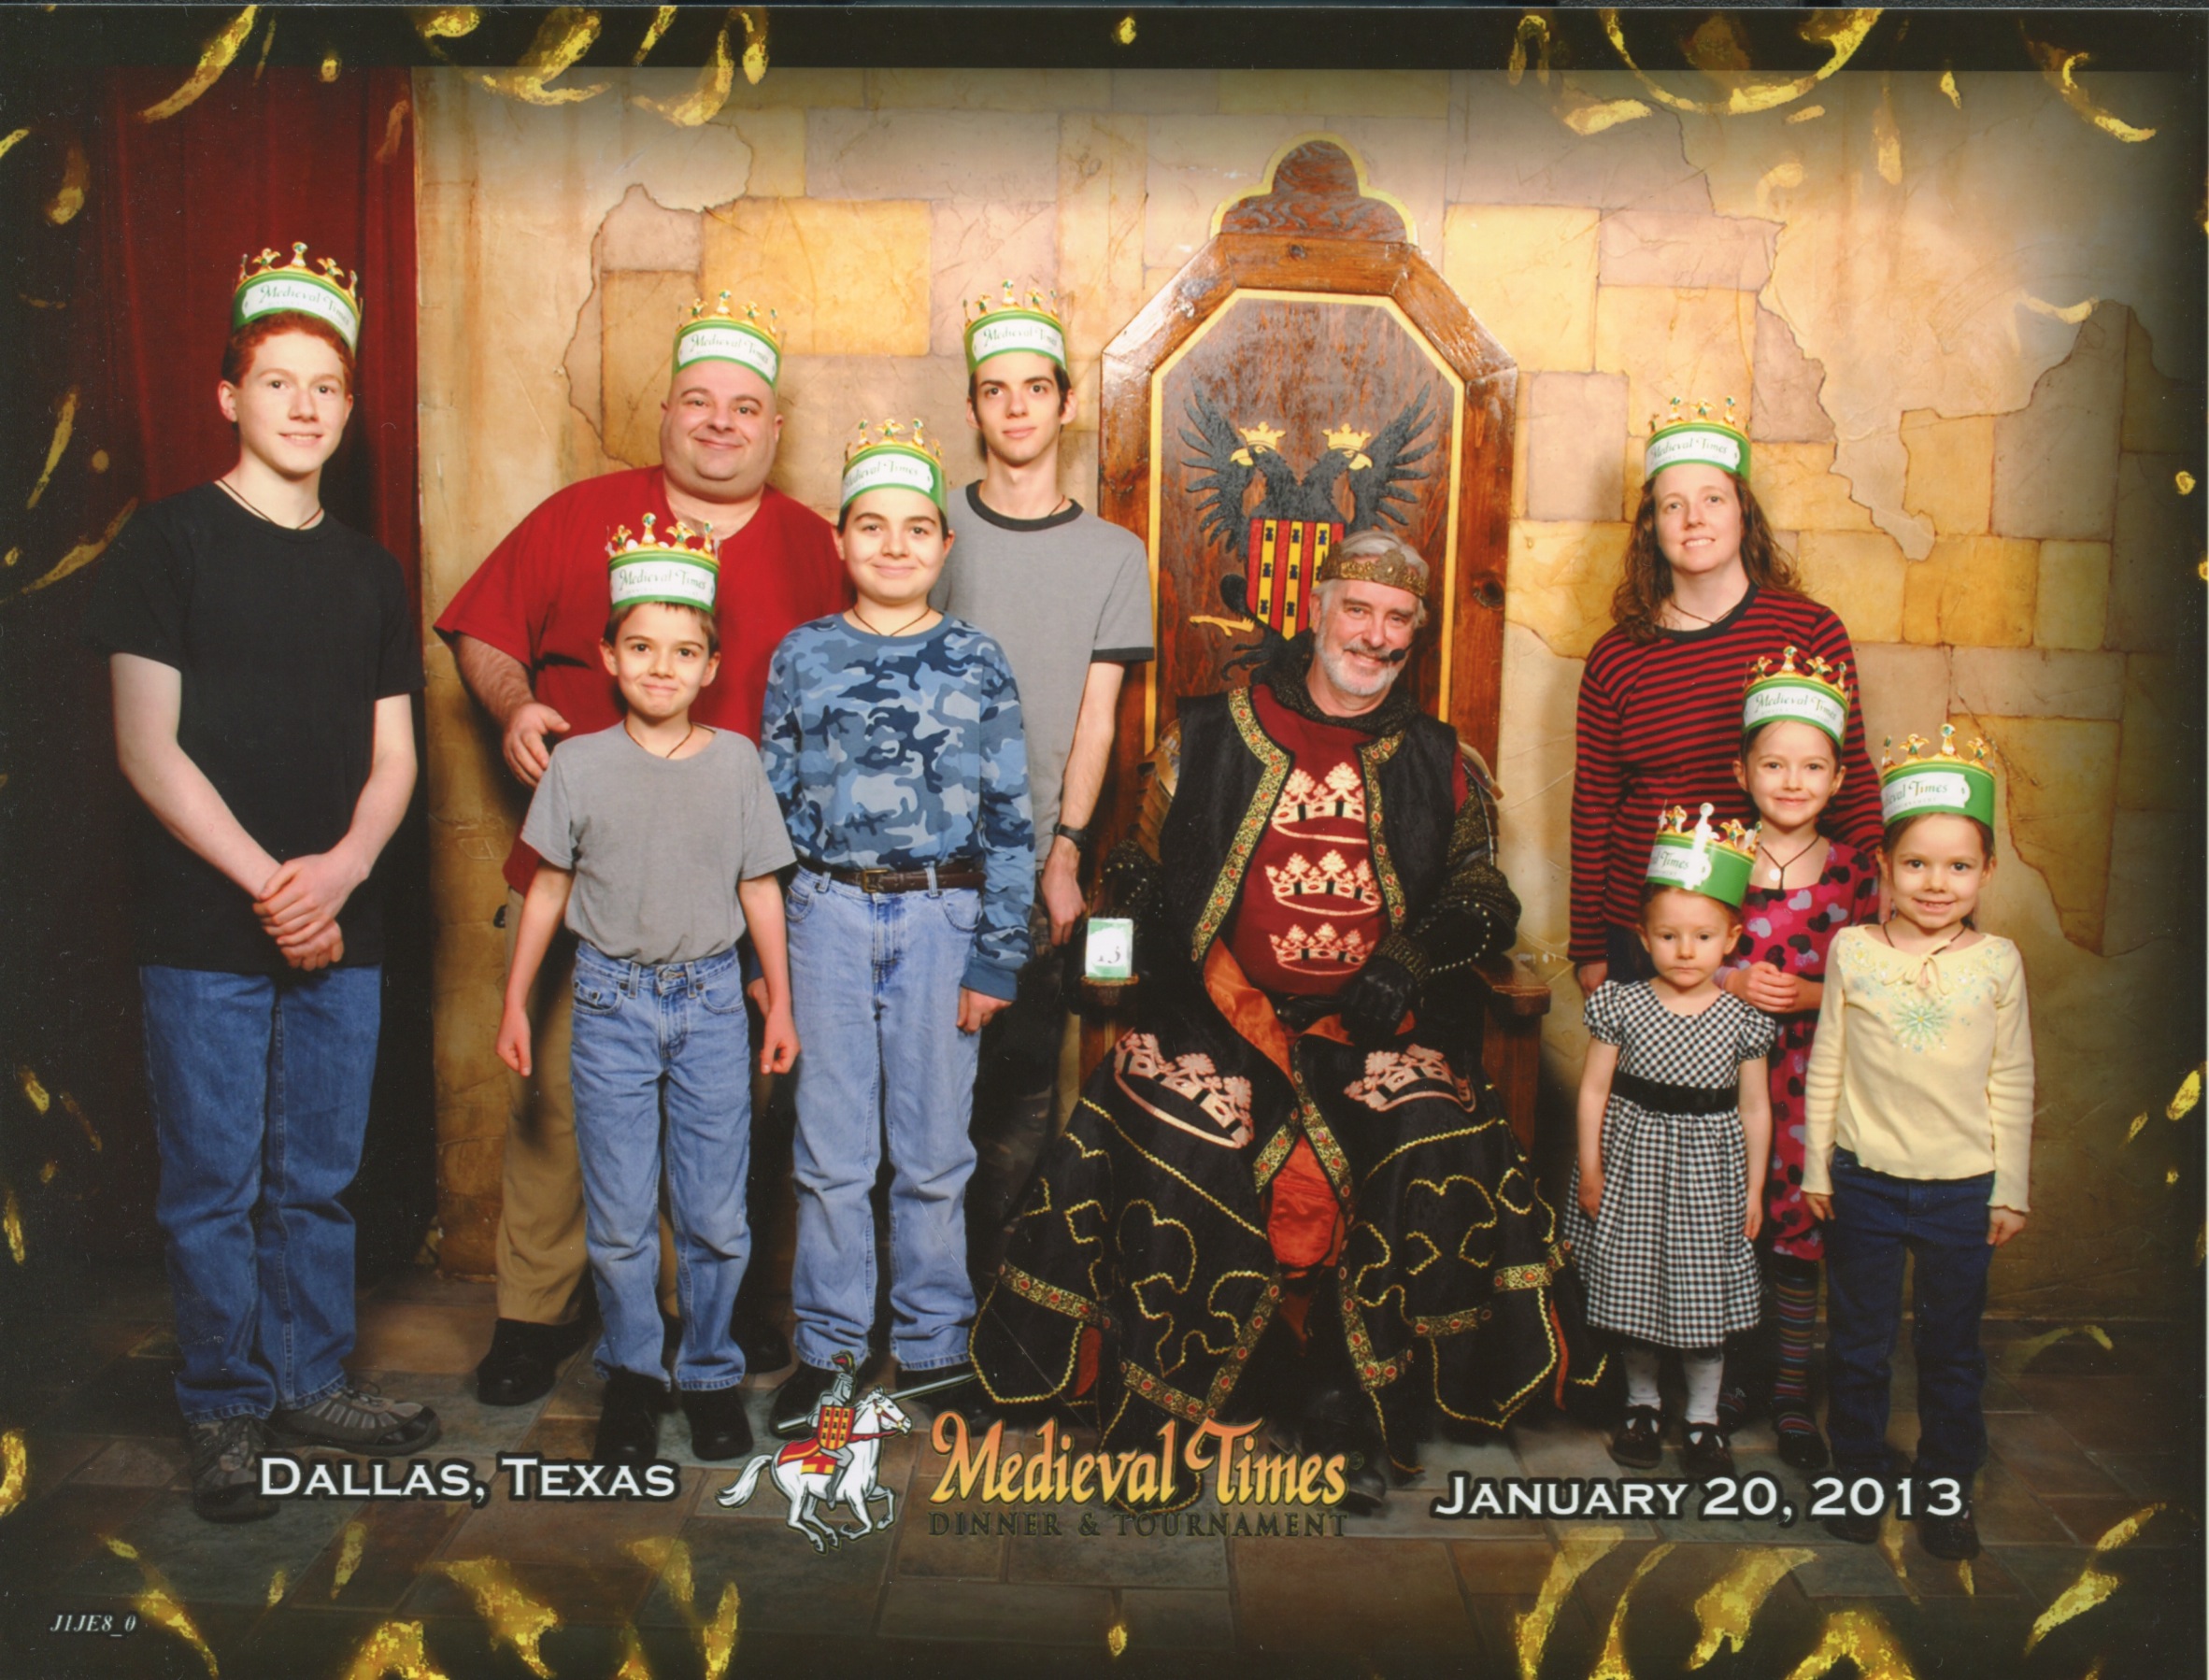 Medieval Times Throne Room. Michael, Papa, Cross, Nunzio, Joseph, The King, Jen, Catie, Jacinta and Bernie. Bottom Text: 'Dallas, Texas January 20, 2013'